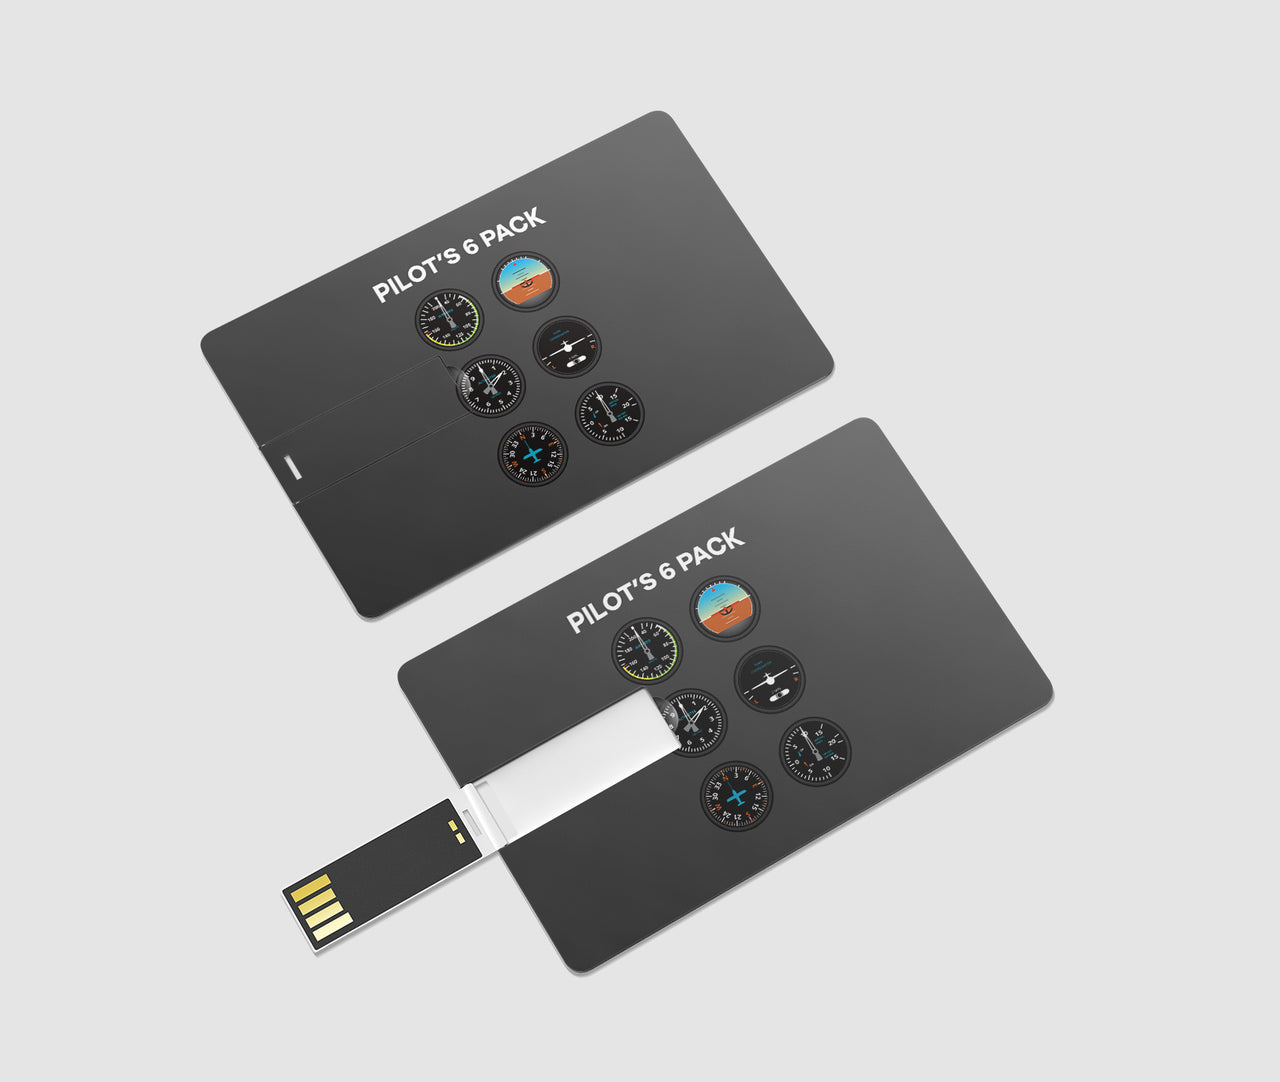 Pilot's 6 Pack Designed USB Cards